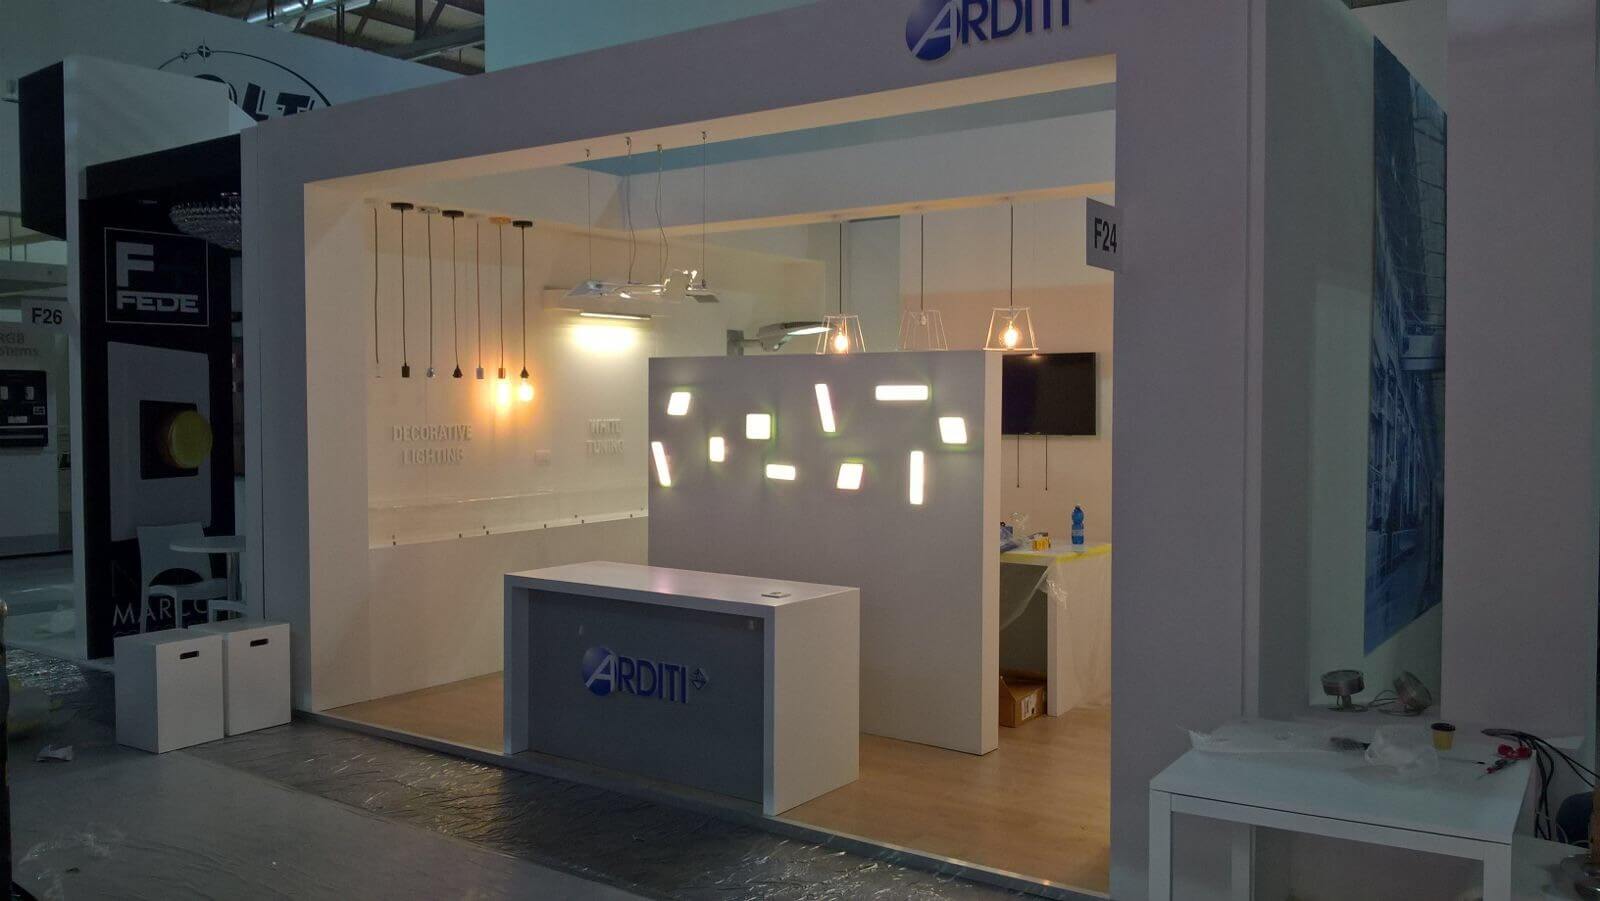 Arditi spa booth at Euroluce showing LumiBlade OLED panels